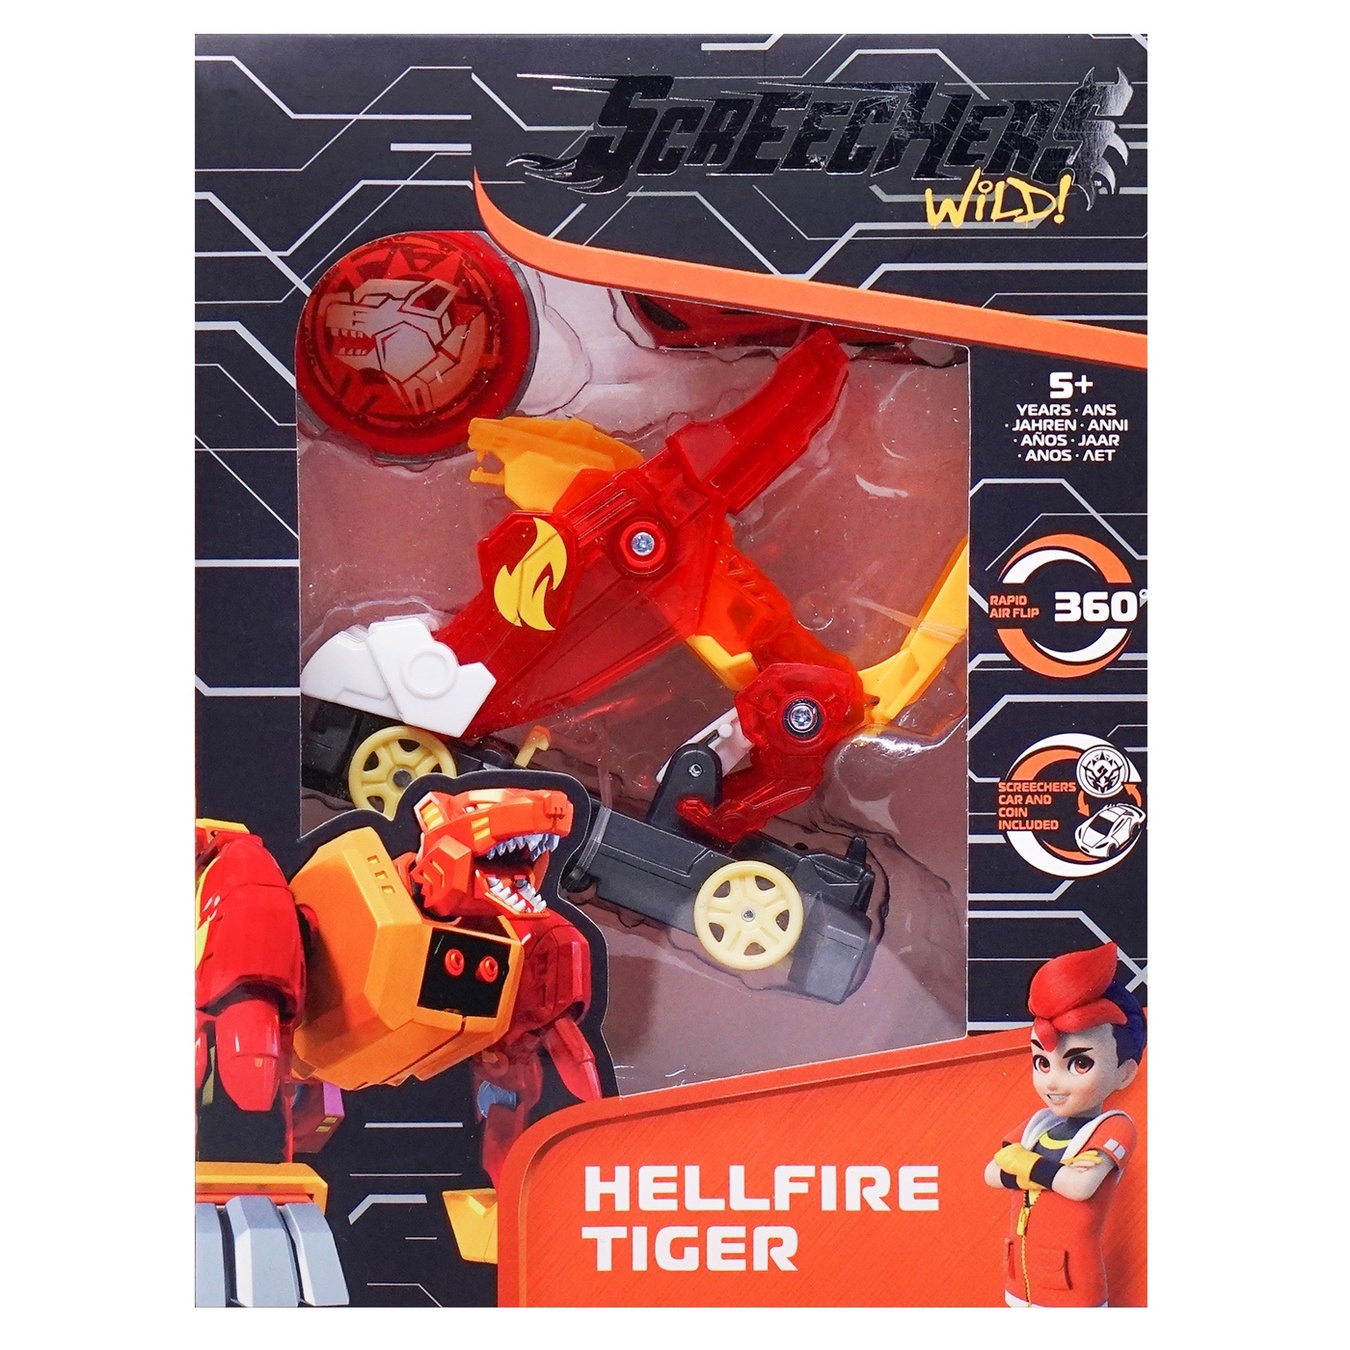 Screechers Wild transforming car! S4 l1 - Hellfire Tiger